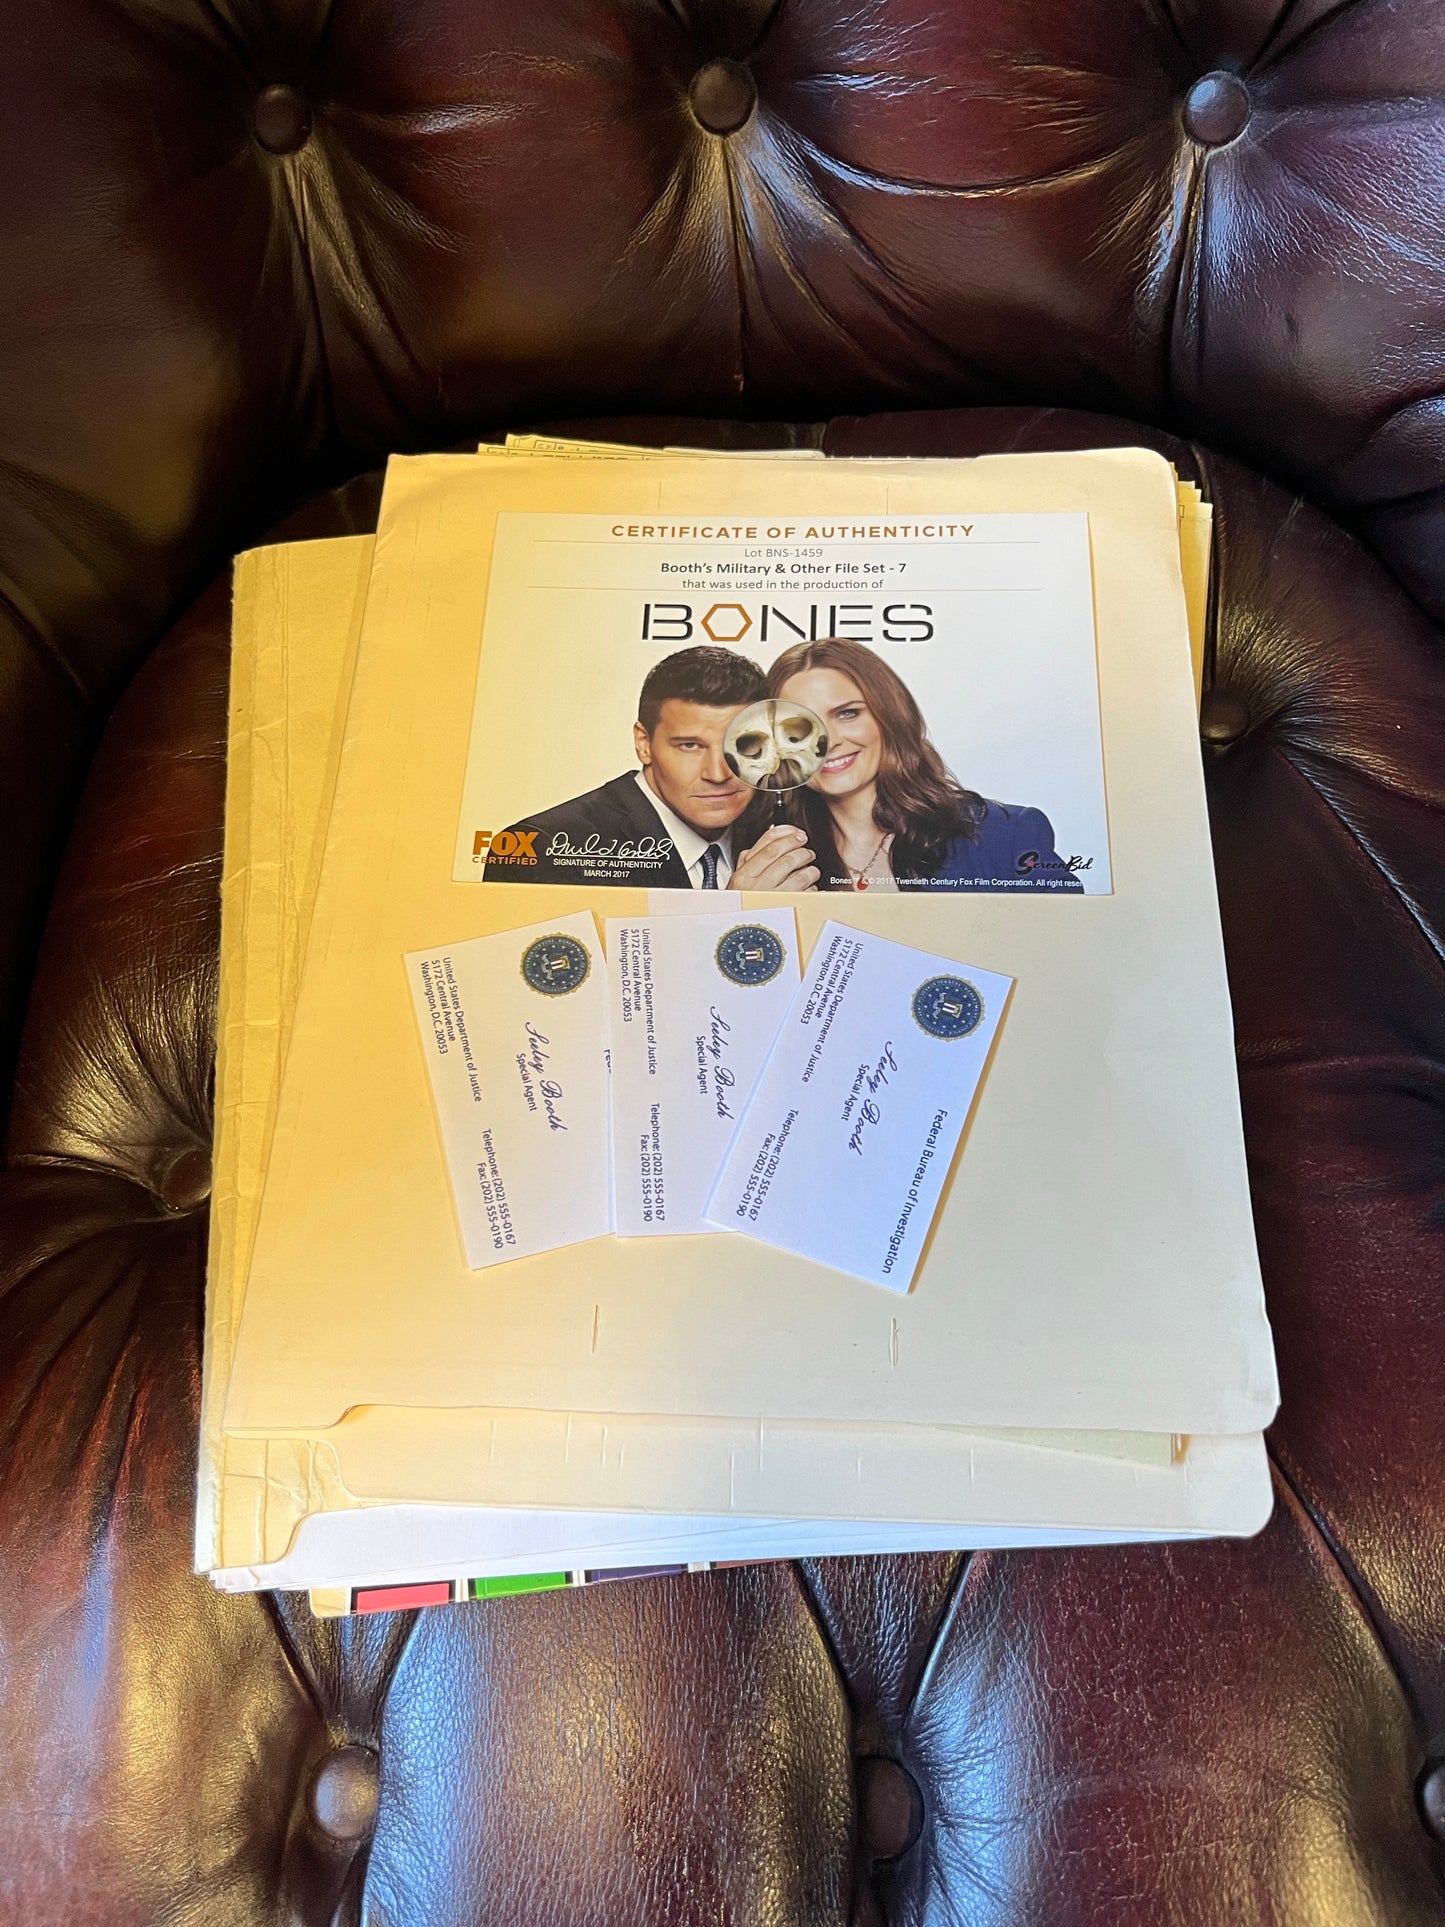 BONES: Booth's Files